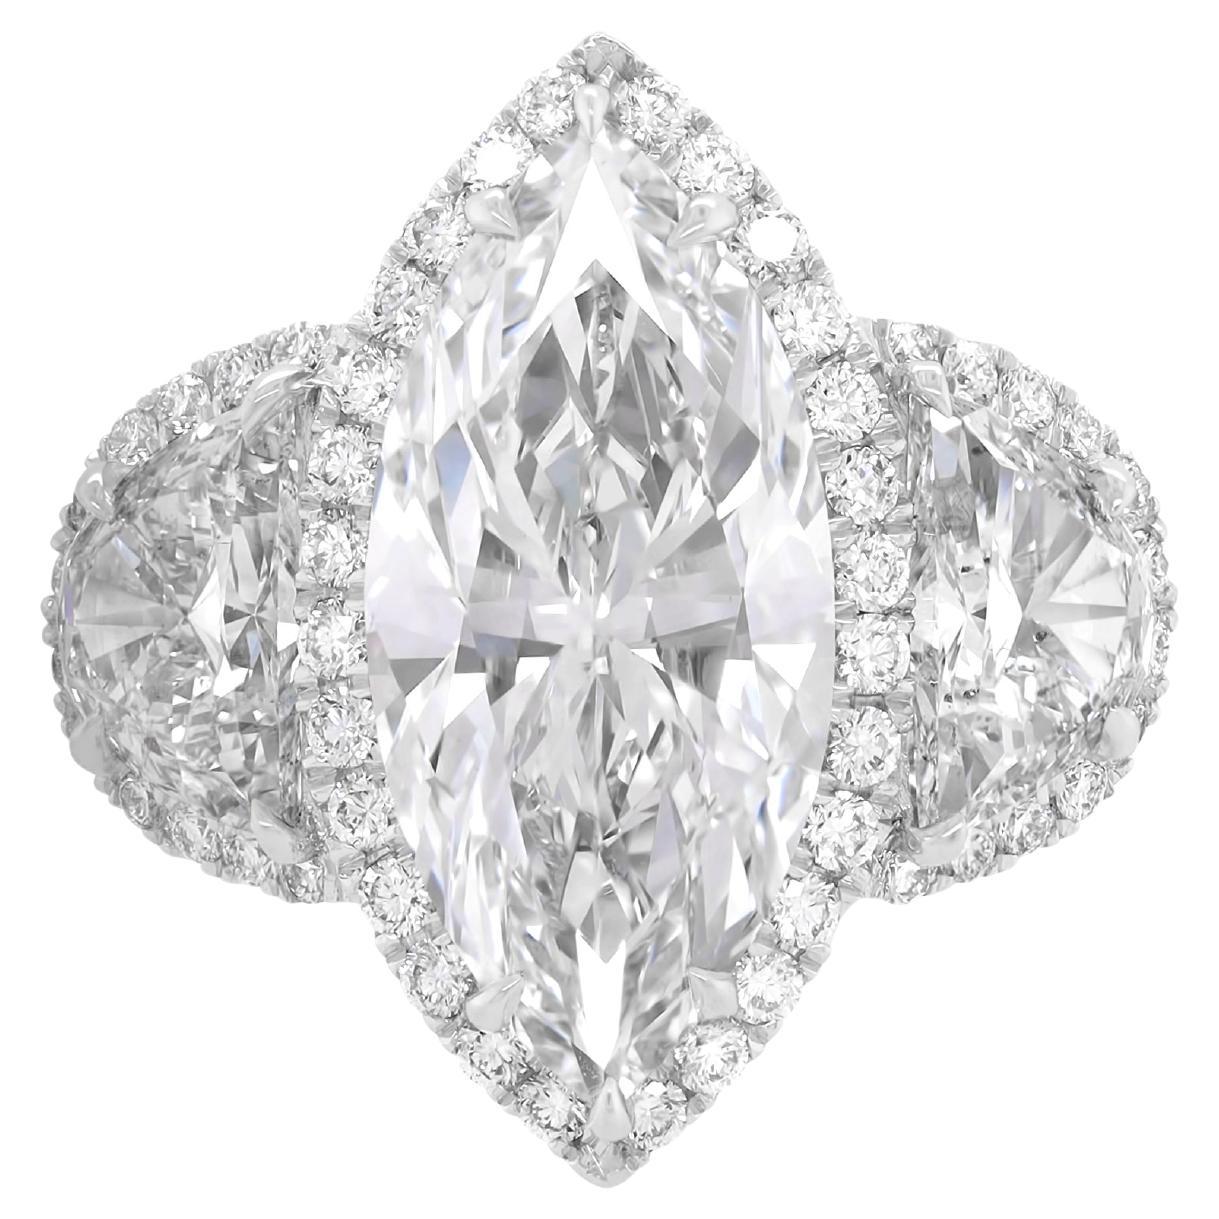 Diana M. 5.65 Carat E Color VS2 in Clarity Marquise Diamond Ring